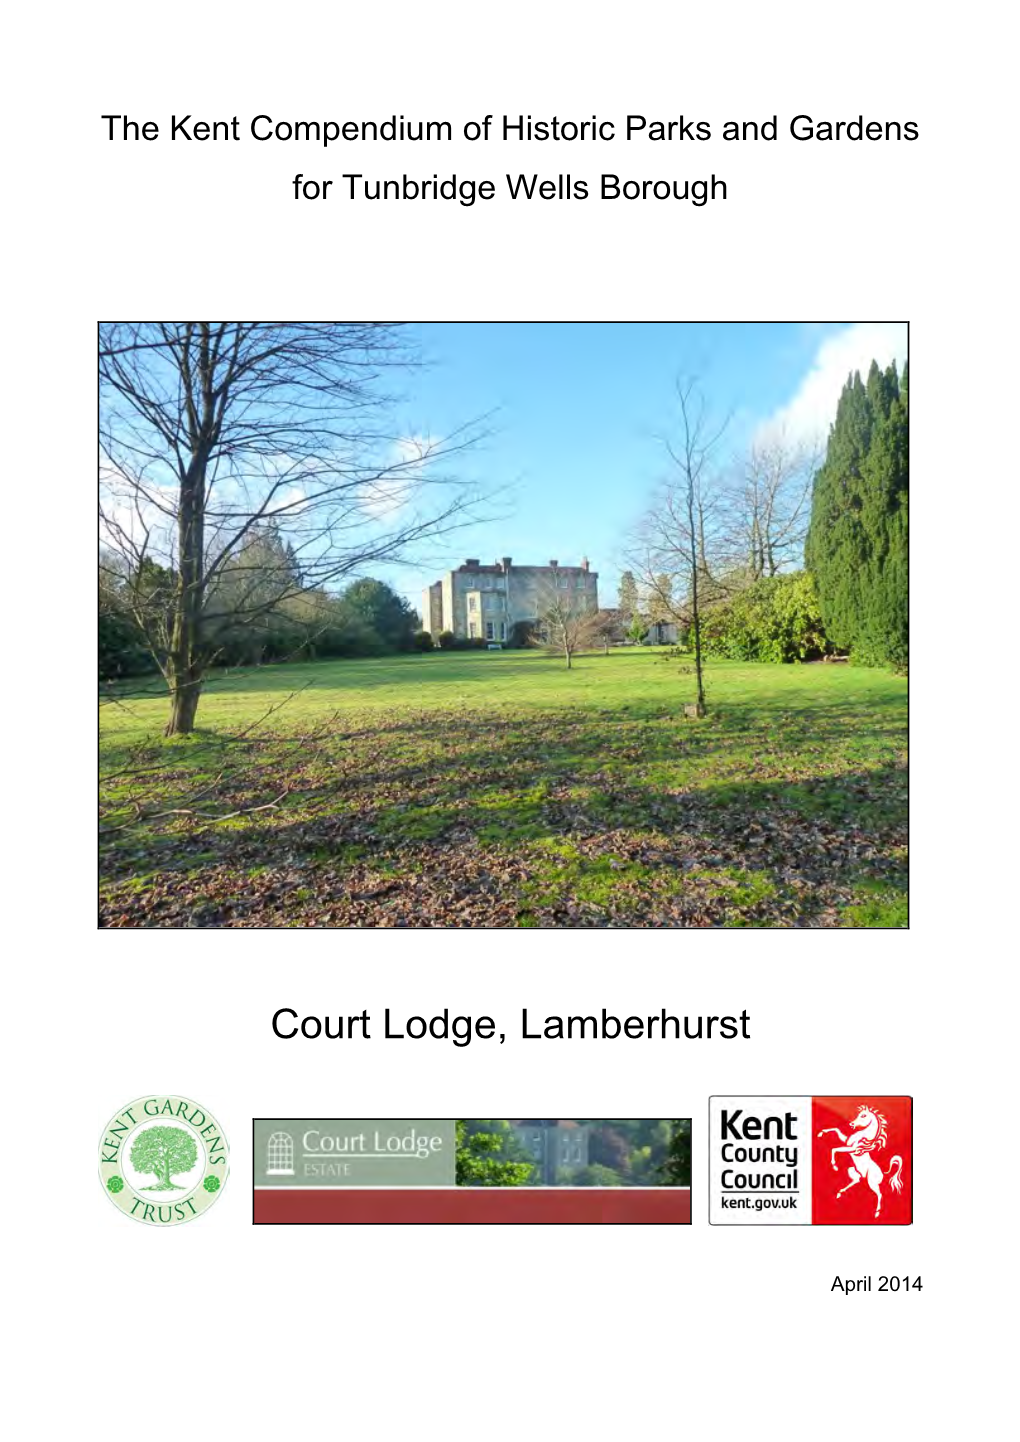 Court Lodge, Lamberhurst